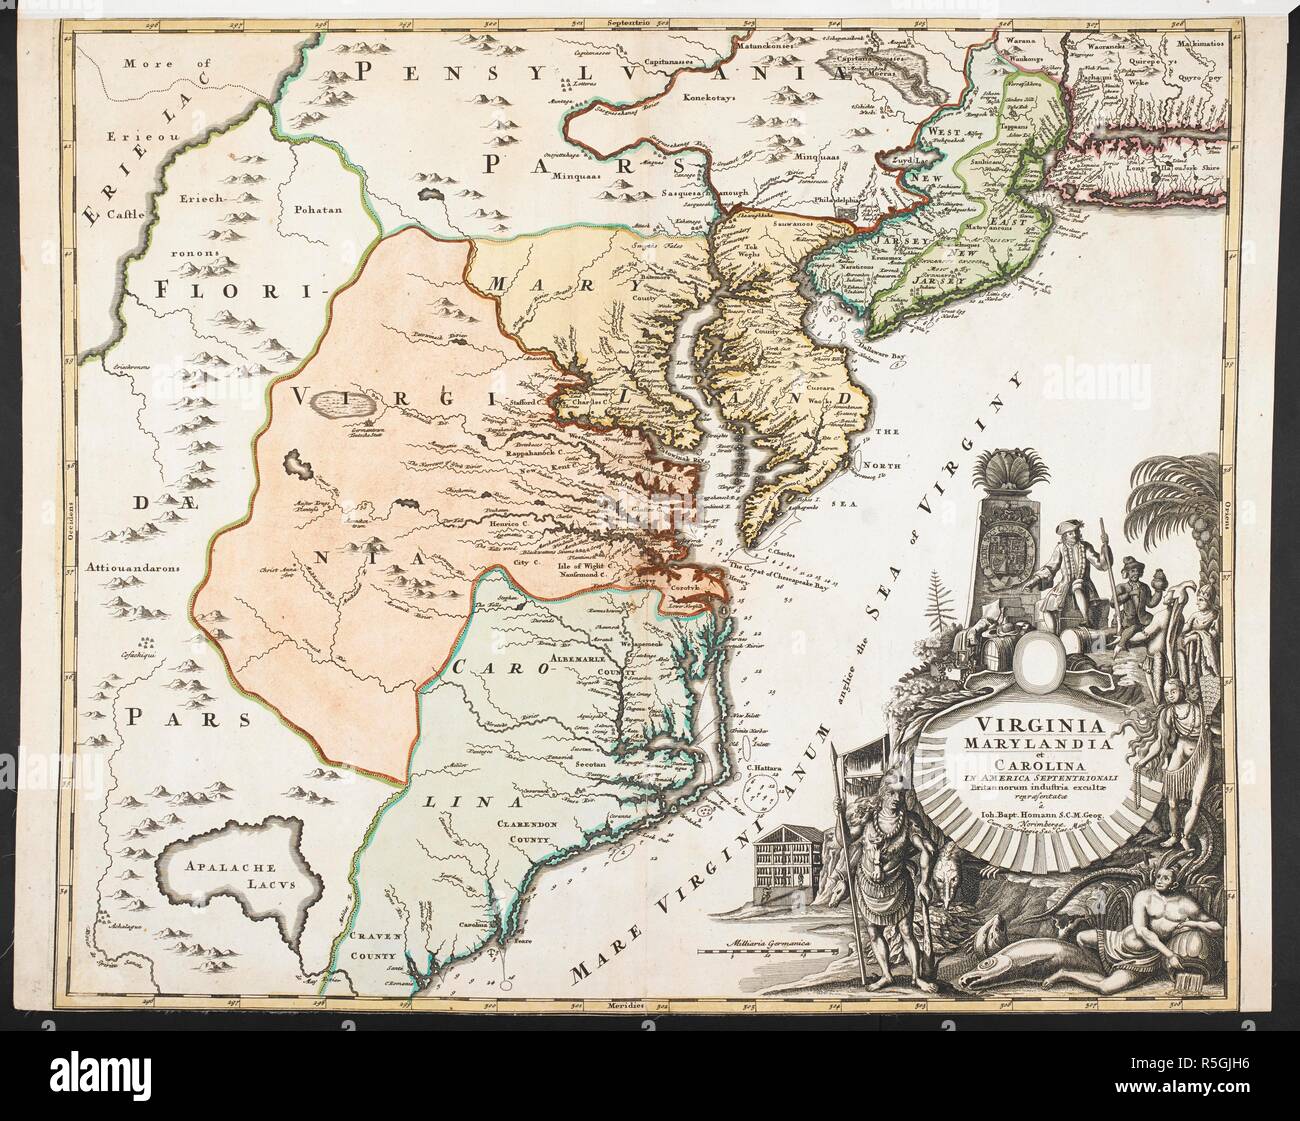 An 18th century map of Virginia, Maryland and Carolina, in America. Virginia, Marylandia et Carolina in America Septentrionali ... a J.B. Homann. Norimbergae, [1720?]. Source: Maps K.Top120.14. Author: HOMANN, JOHANN BAPTIST. Stock Photo